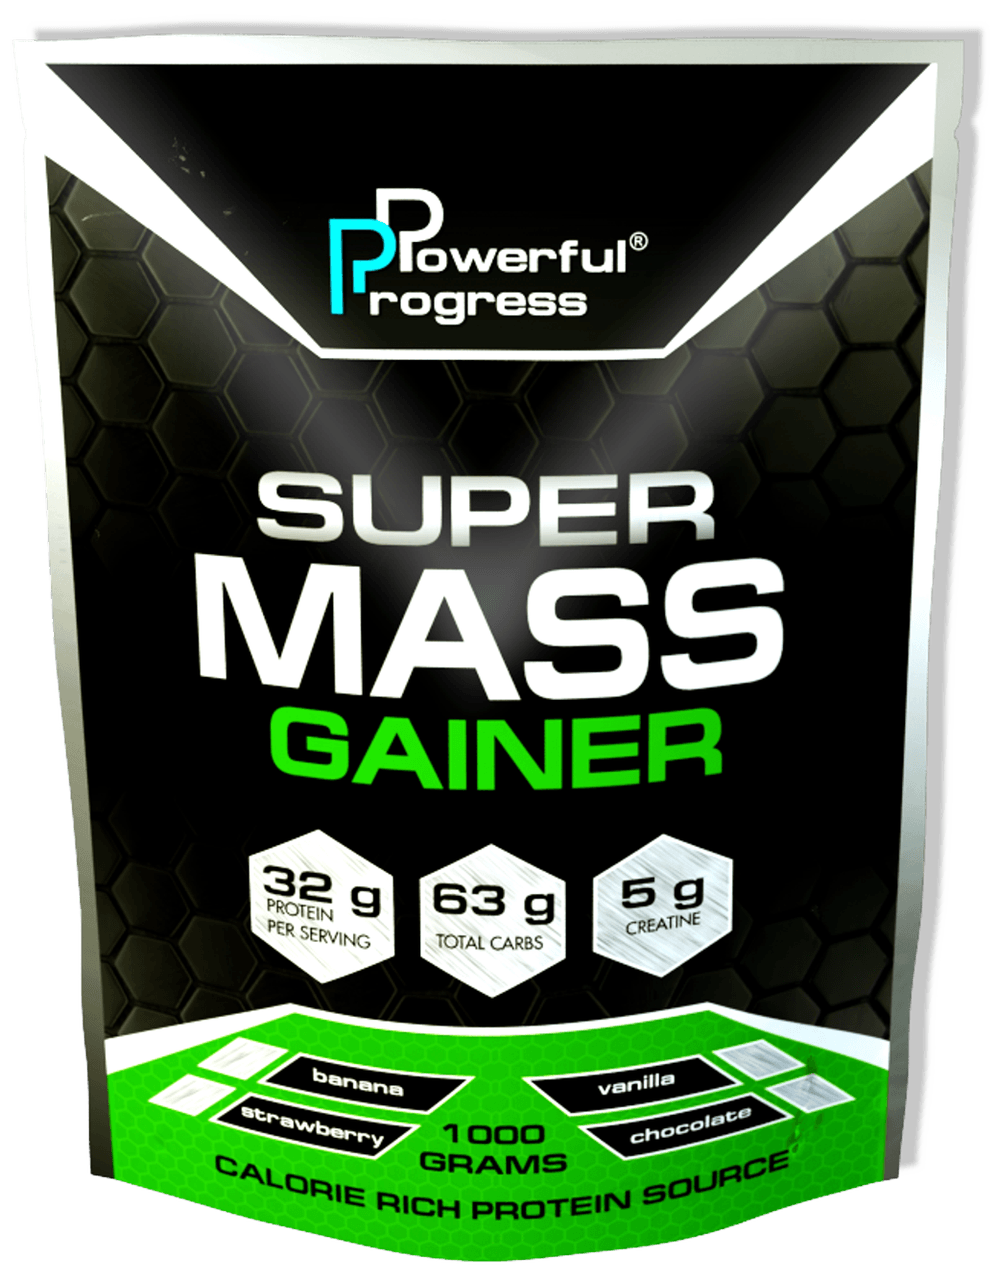 Super Mass Gainer, 1000 g, Powerful Progress. Ganadores. Mass Gain Energy & Endurance recuperación 